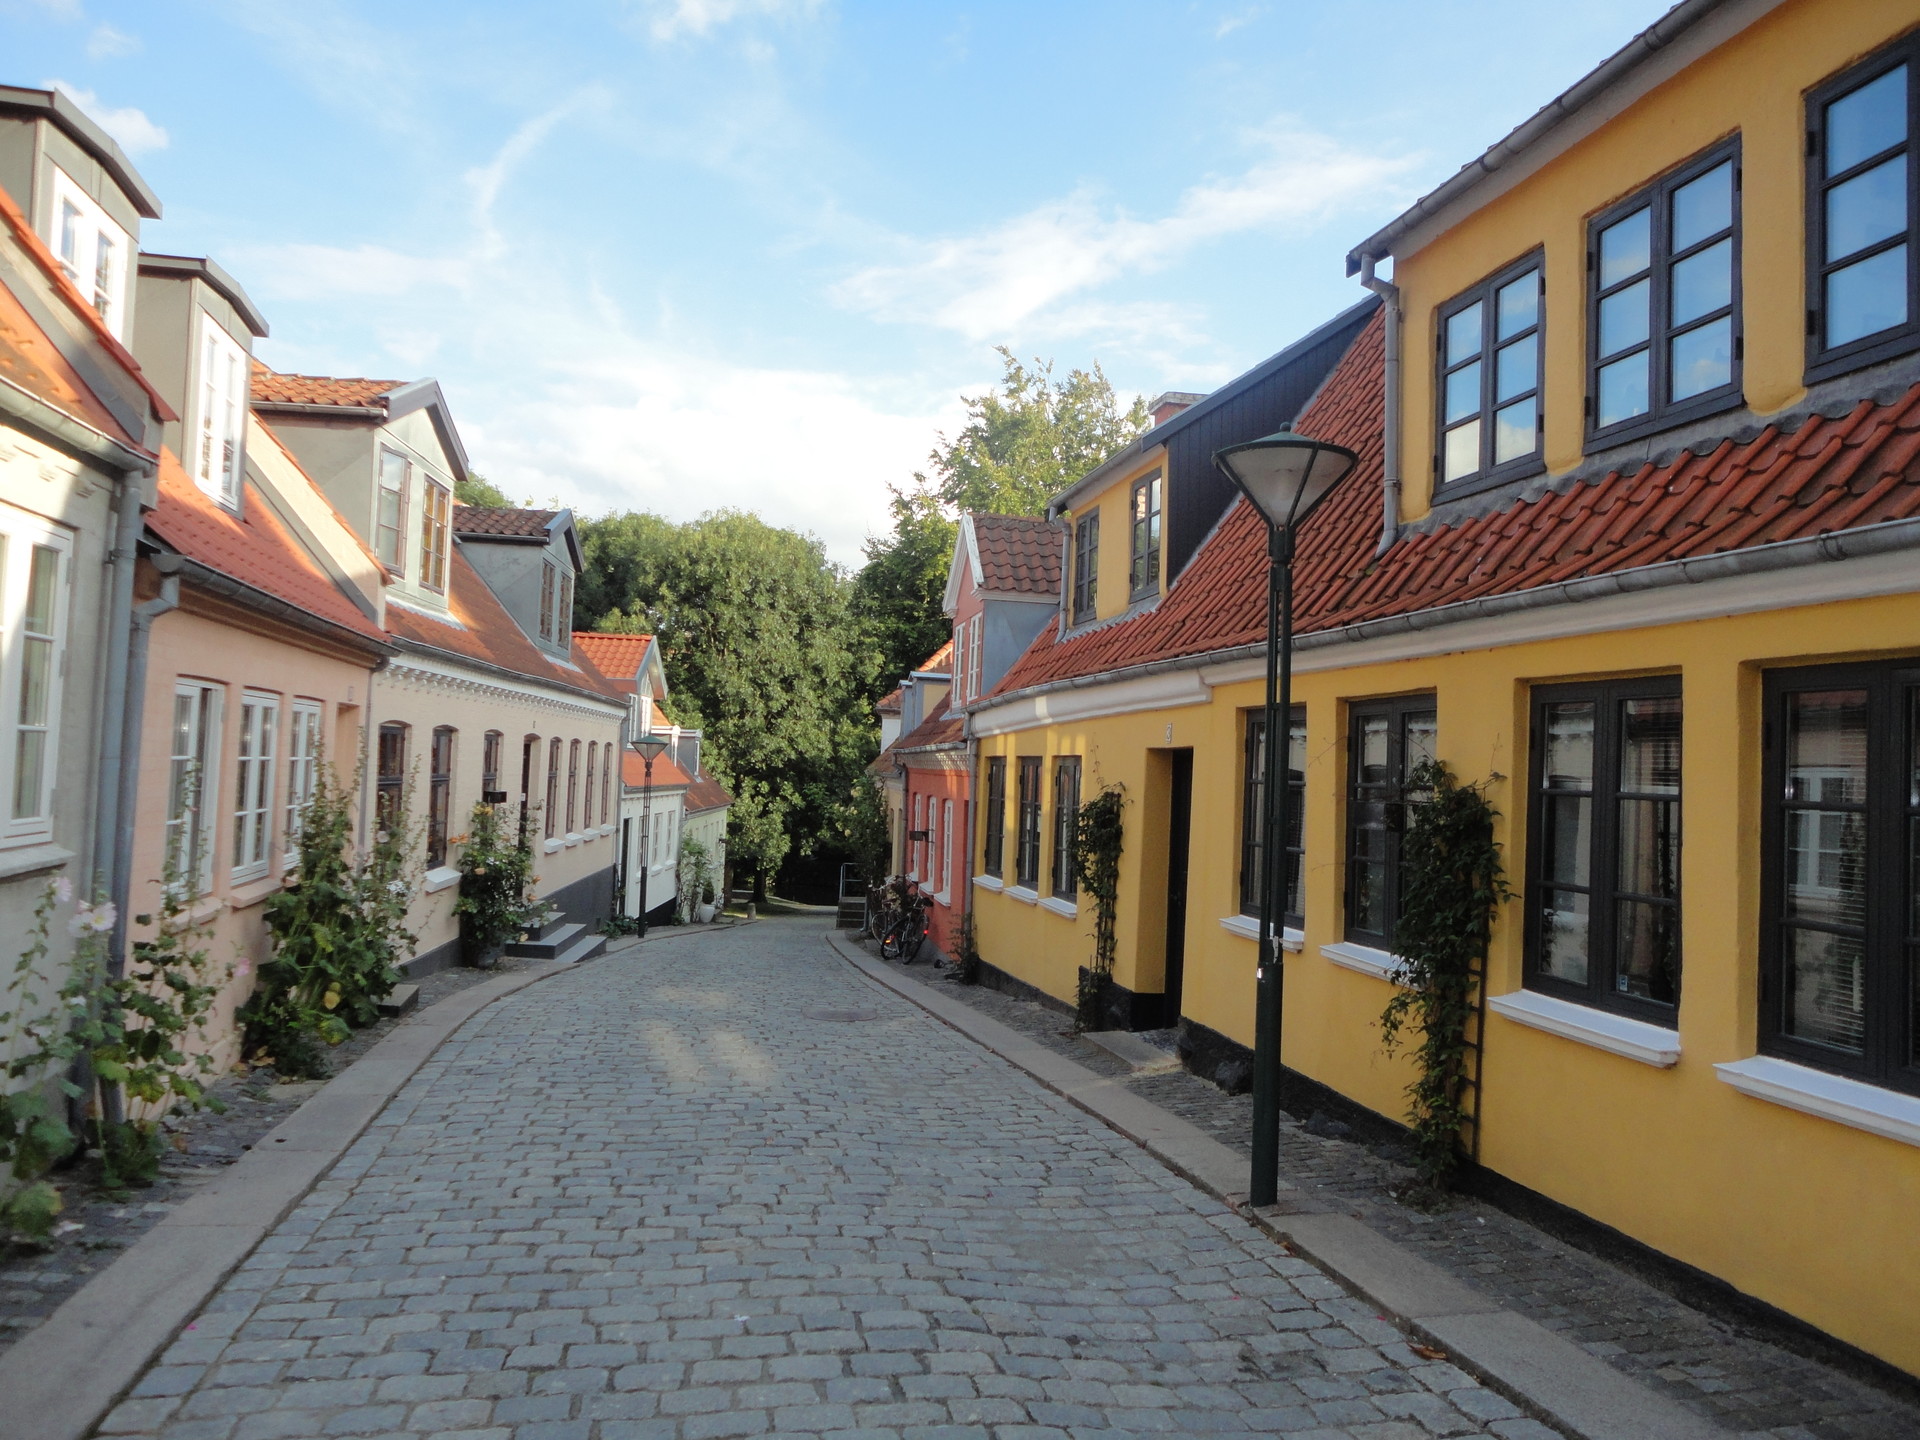 Odense, denmark photo